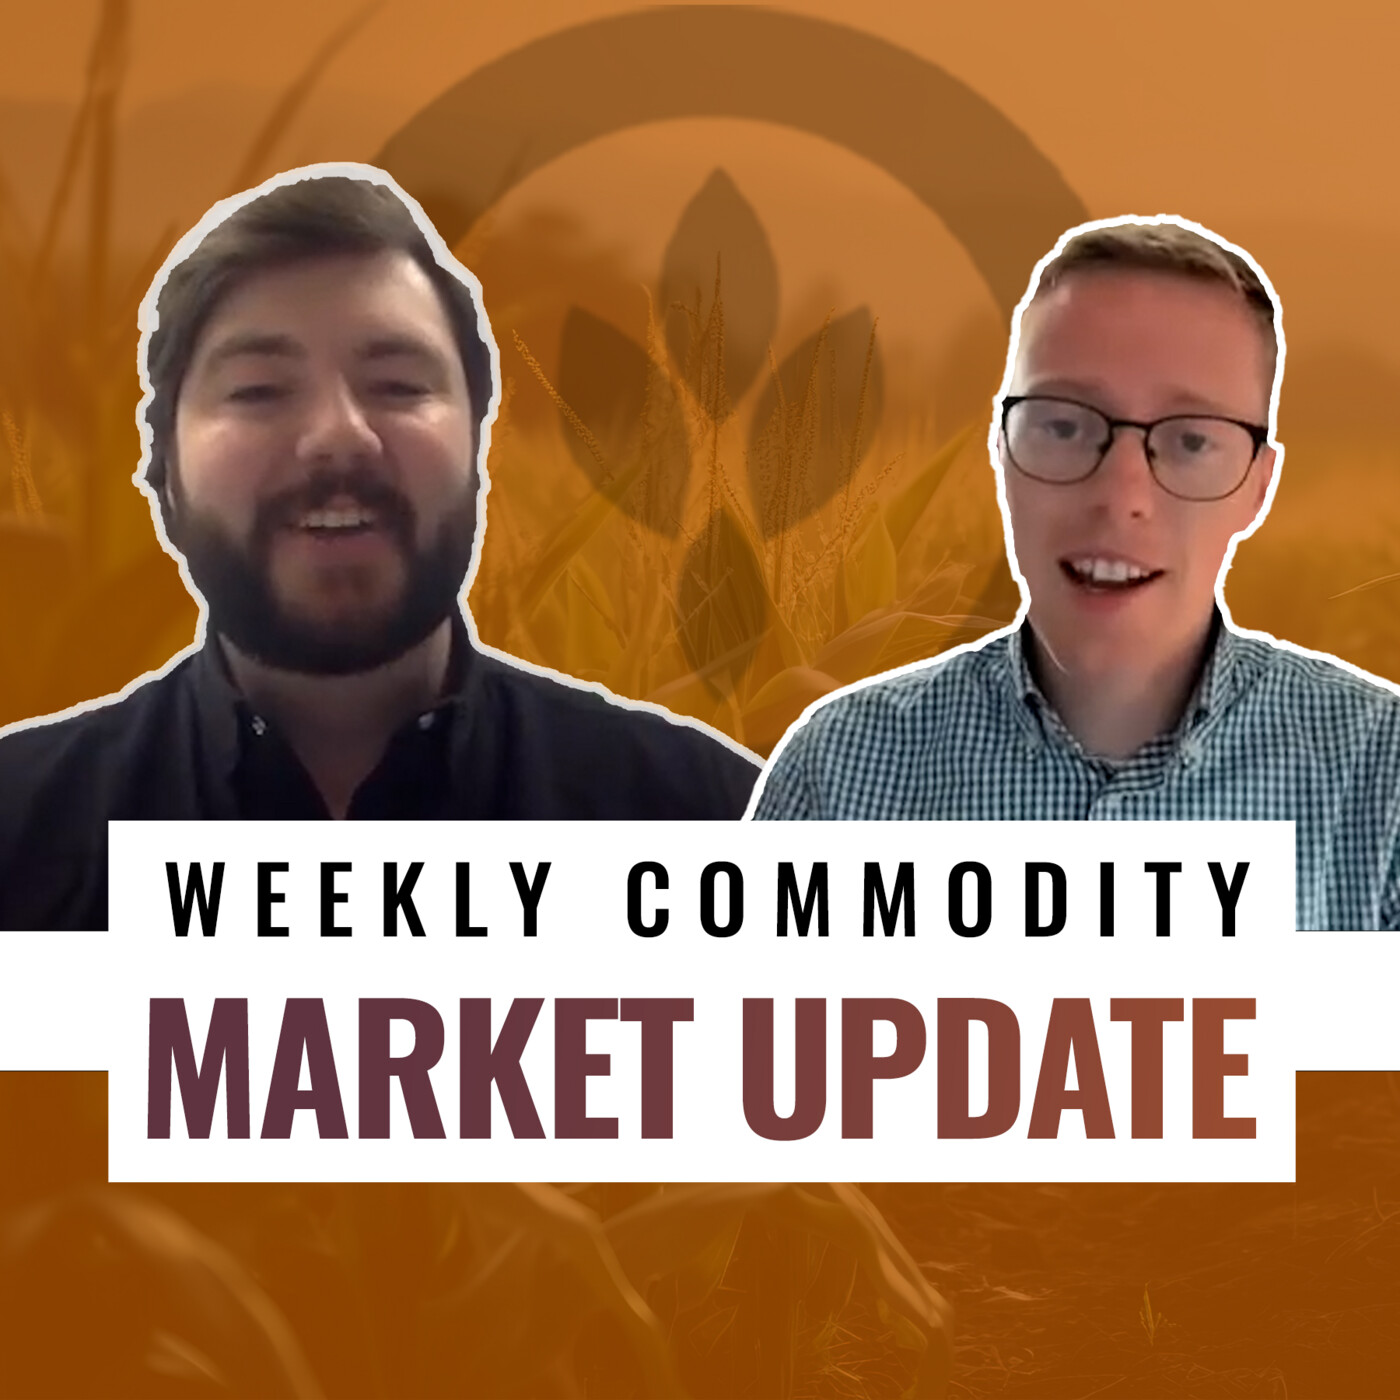 Weekly Commodity Market Update: Alternative U.S. export markets beyond China